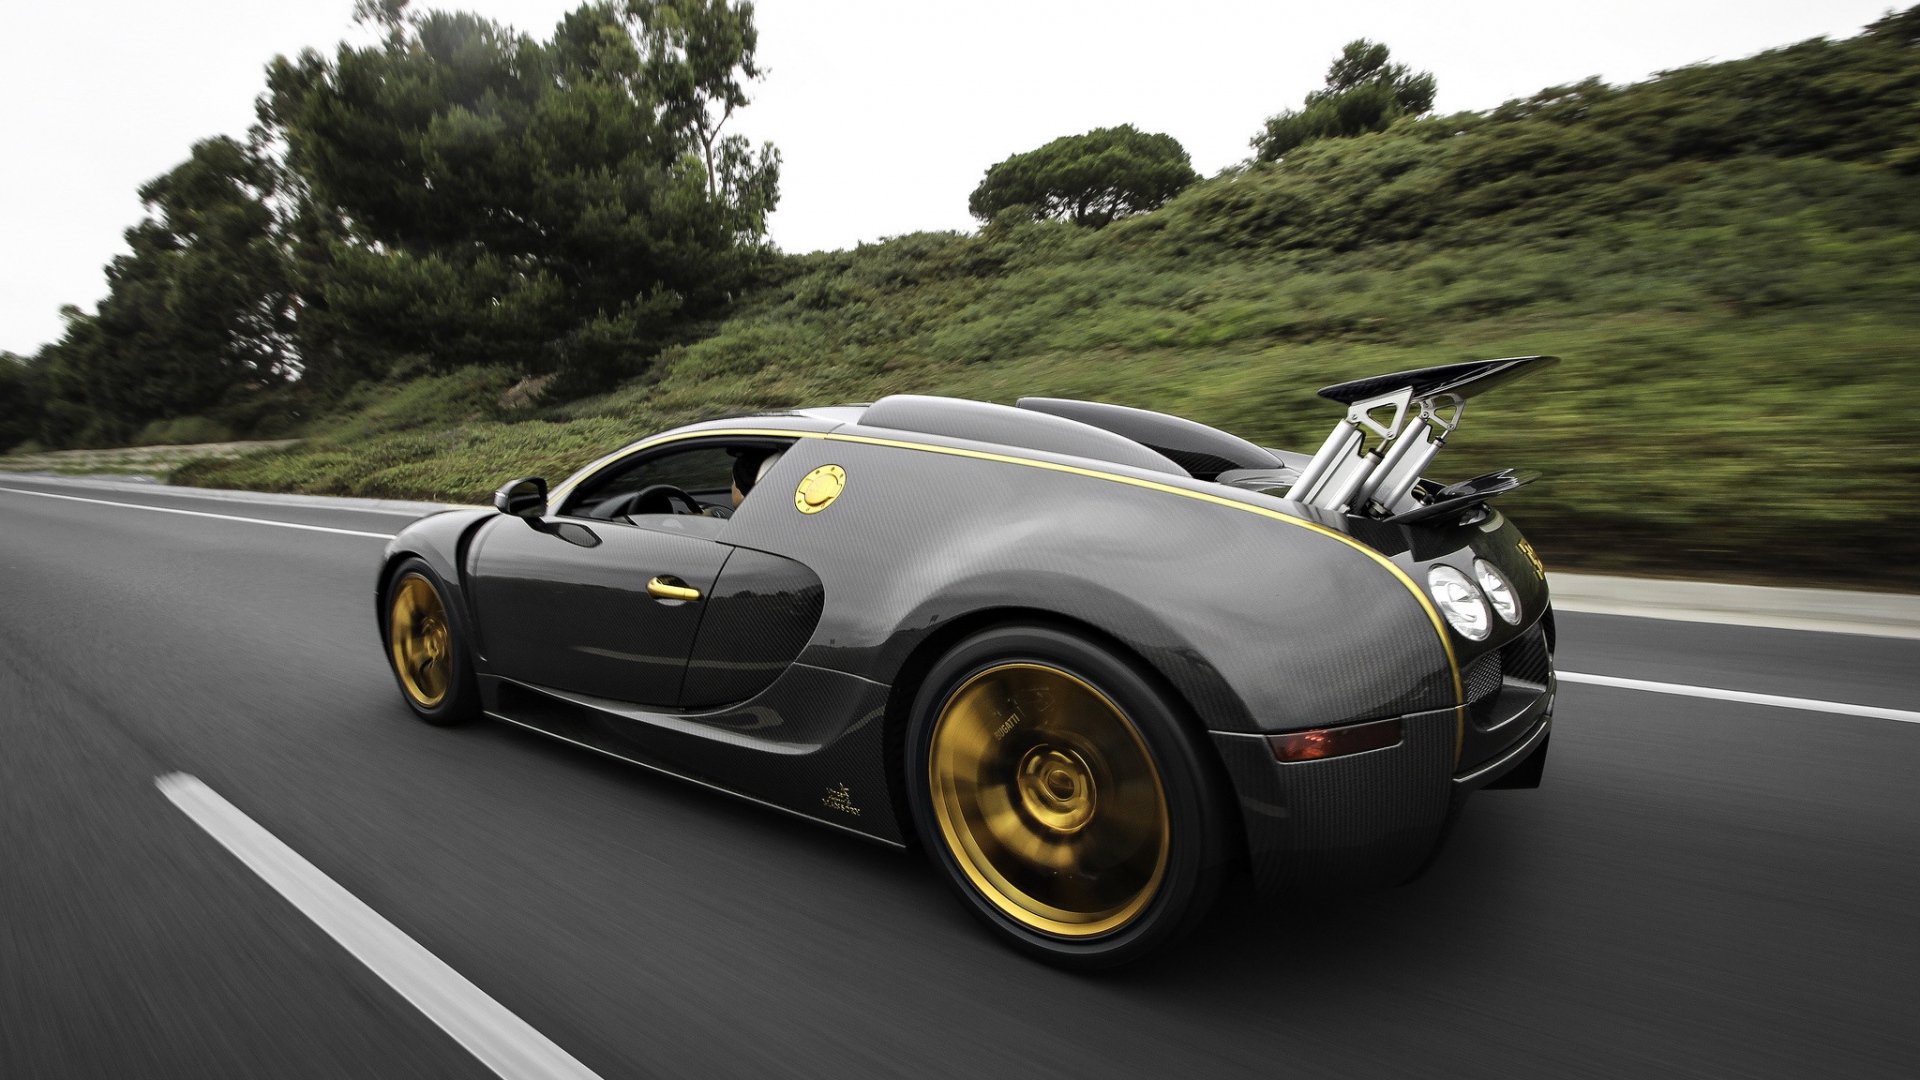 [44+] Bugatti Veyron Wallpaper 1080p on WallpaperSafari